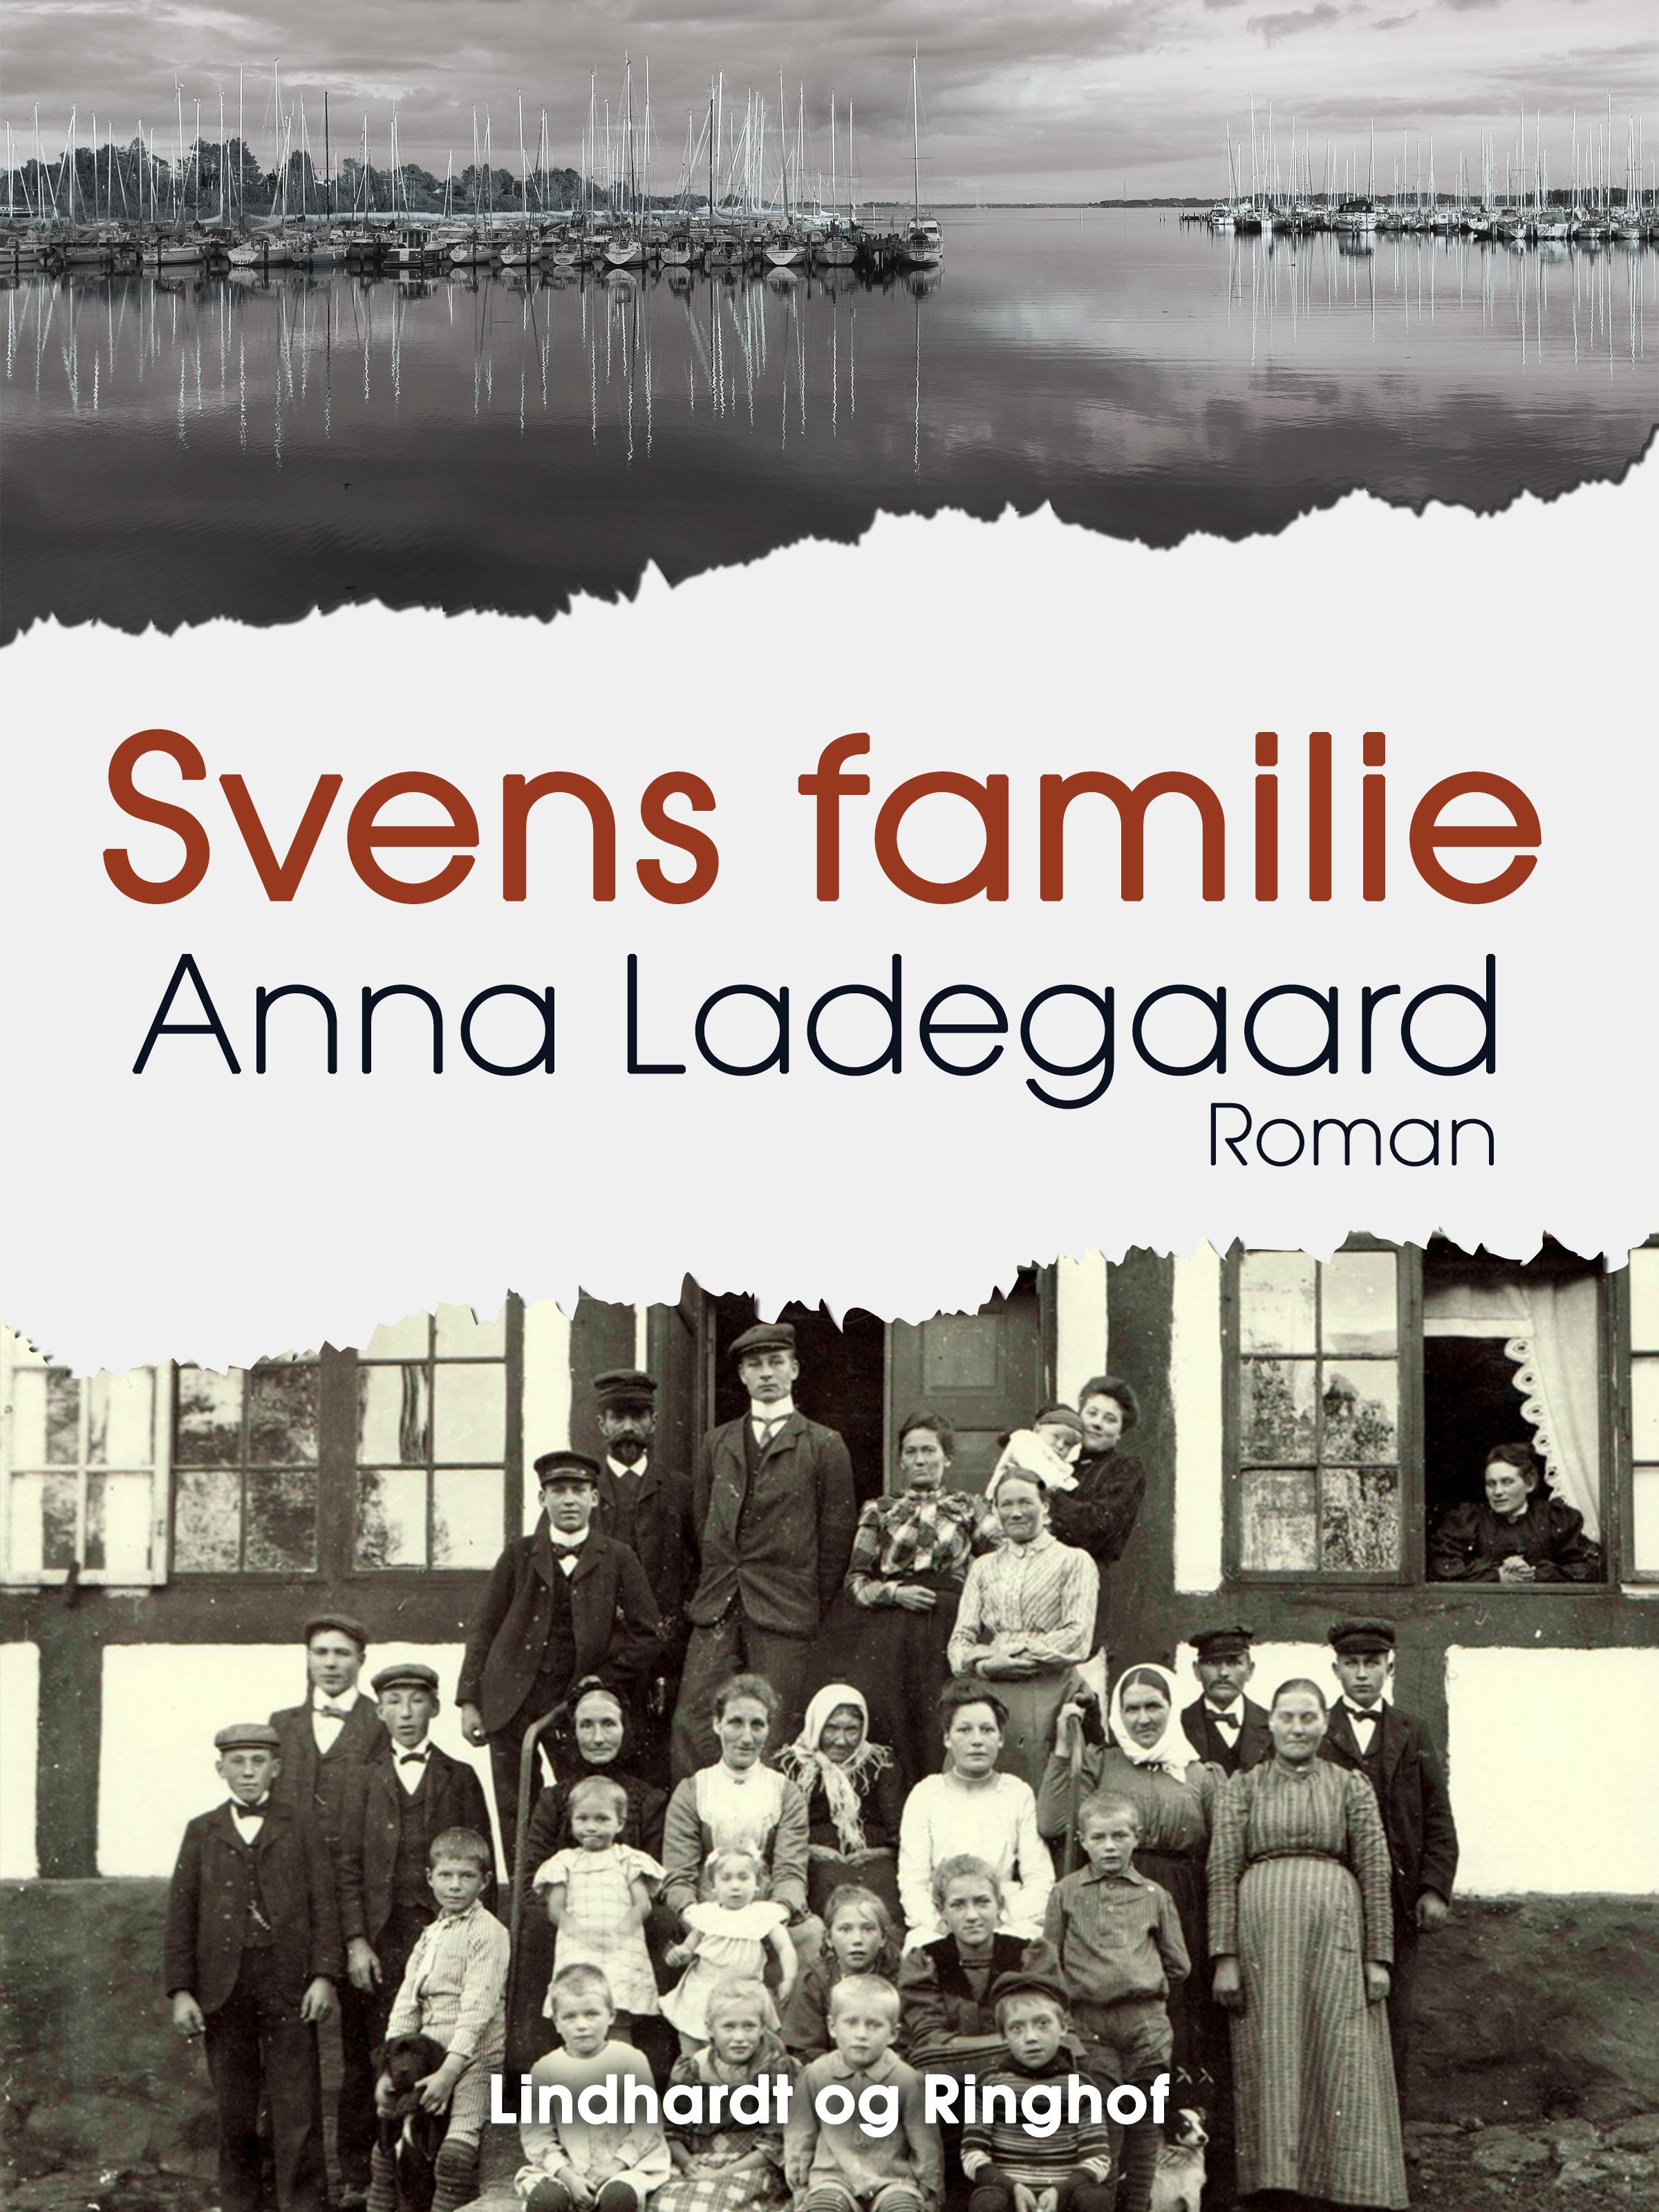 Svens familie, eBook by Anna Ladegaard